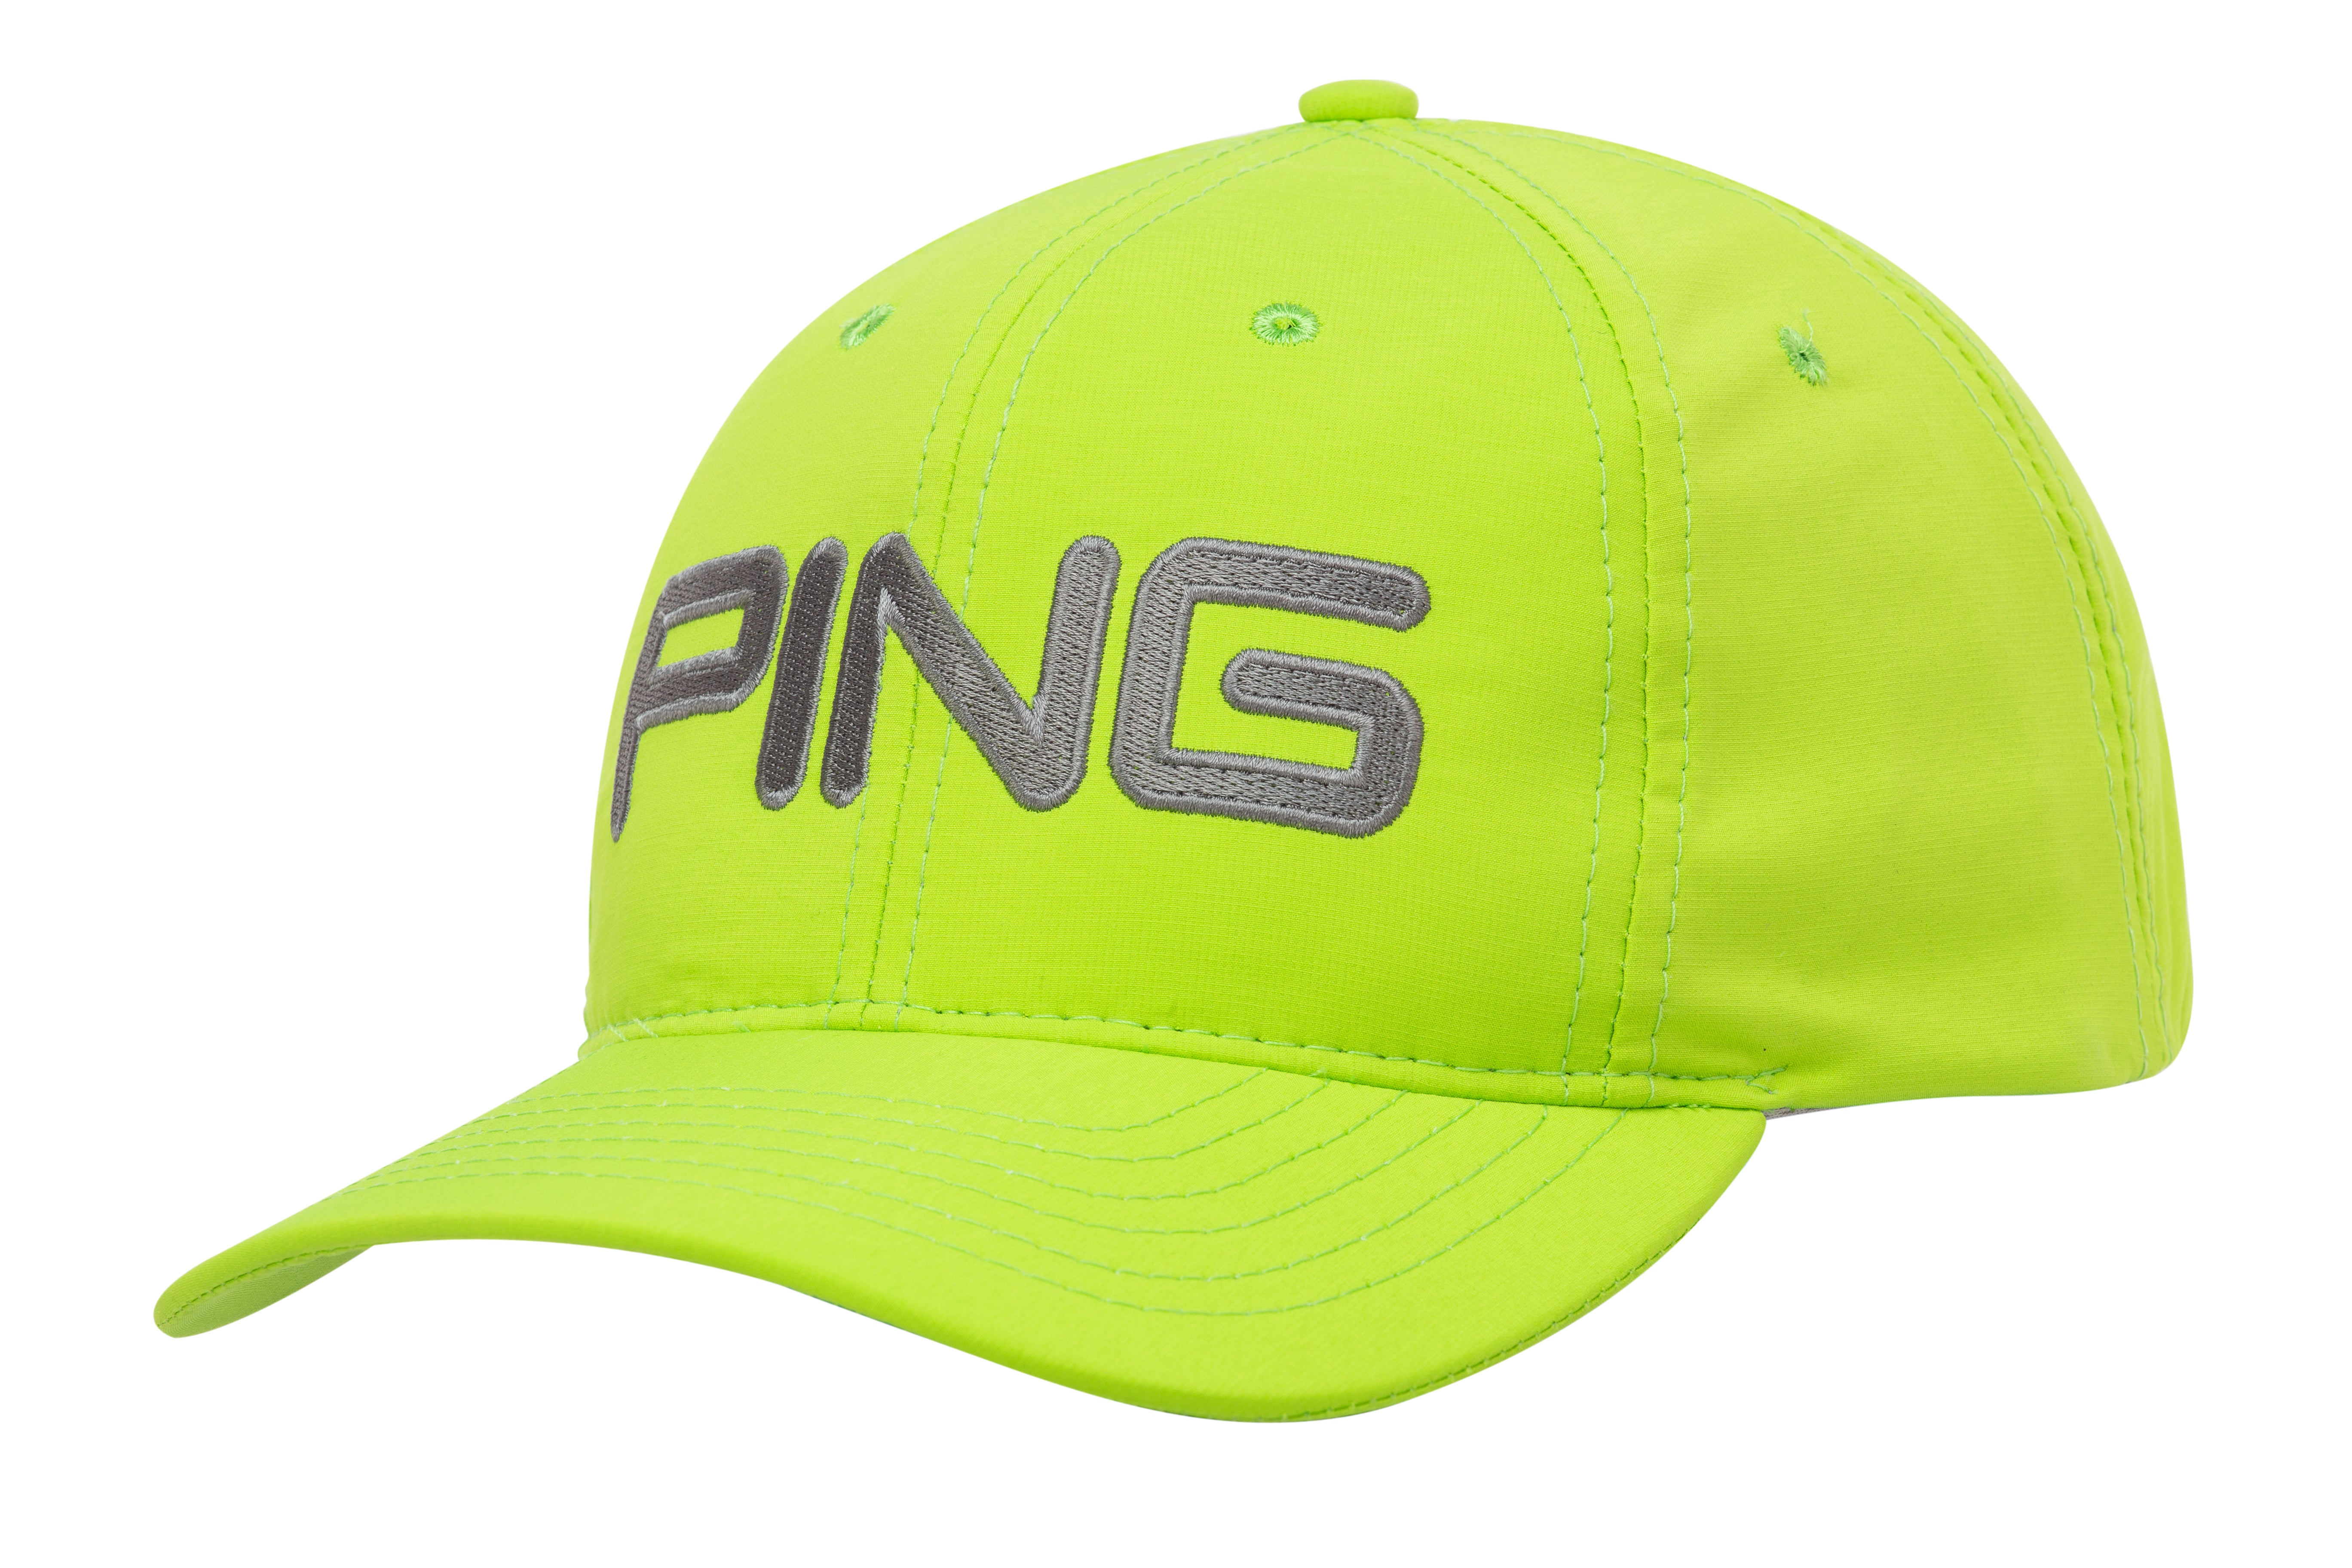 Green 'Lite' Bright Golf Cap